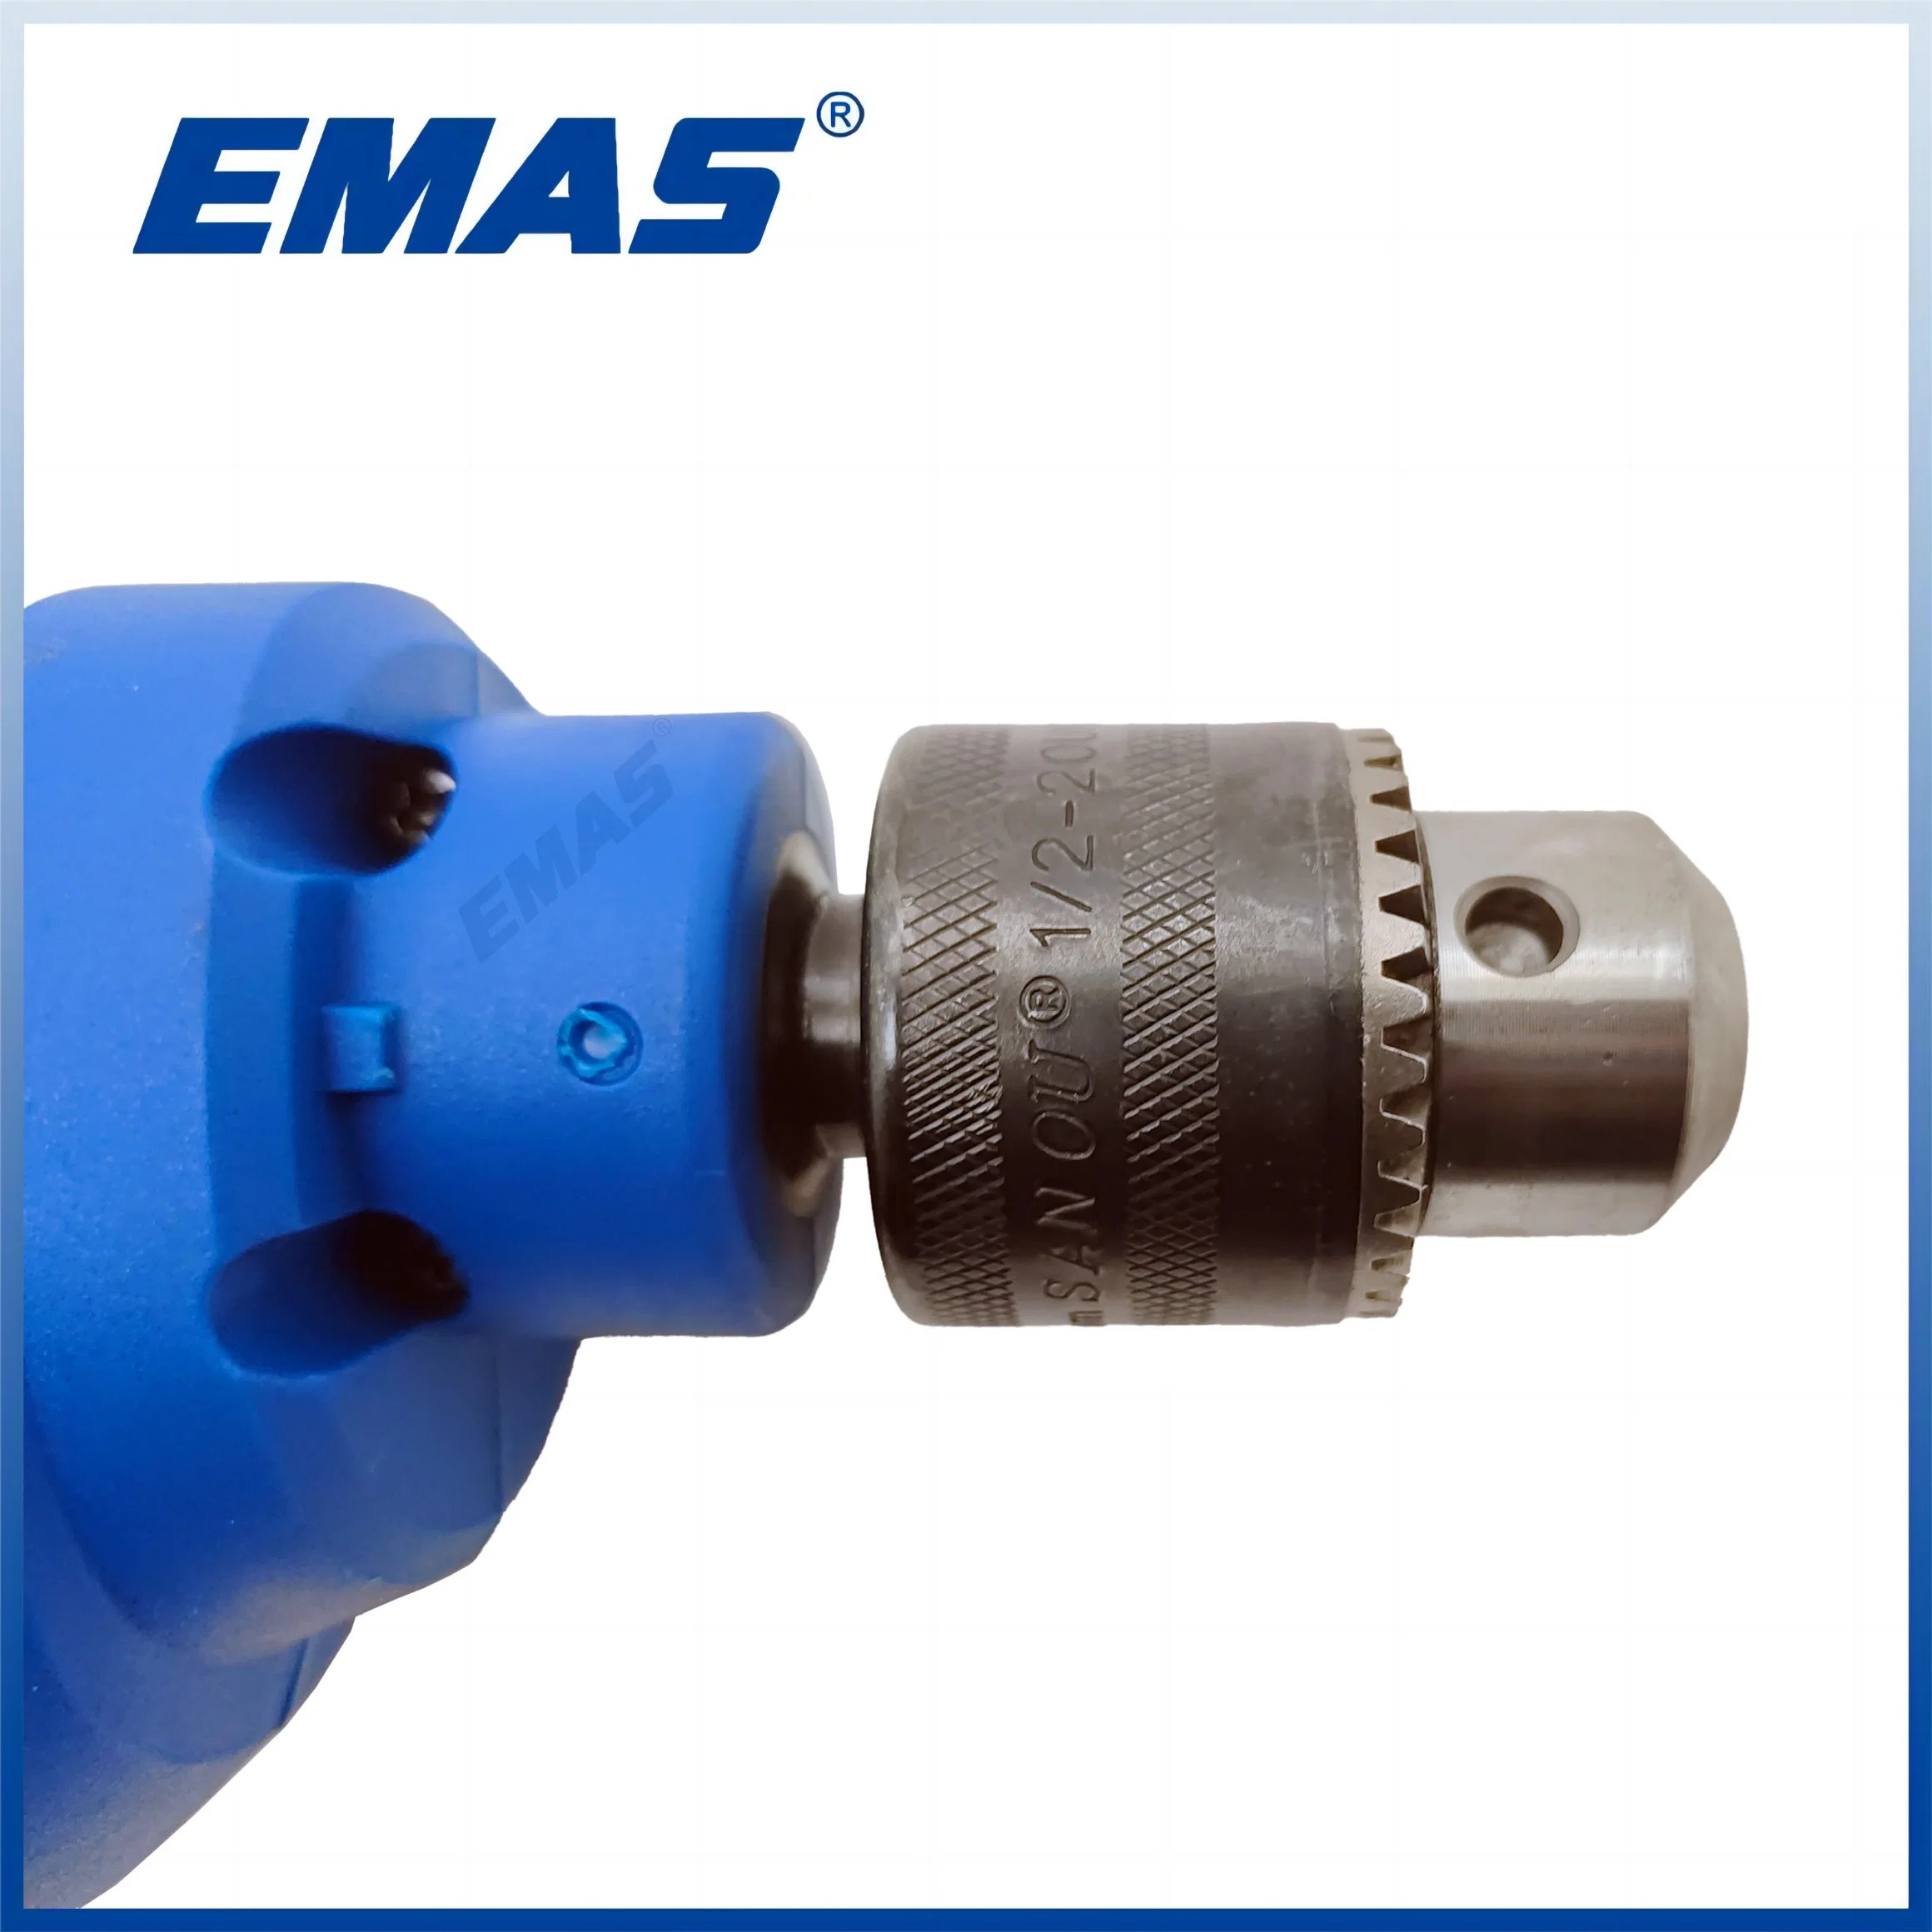 Emas Power Tools 220V Electric Drill 650W Impact Drill 13mm